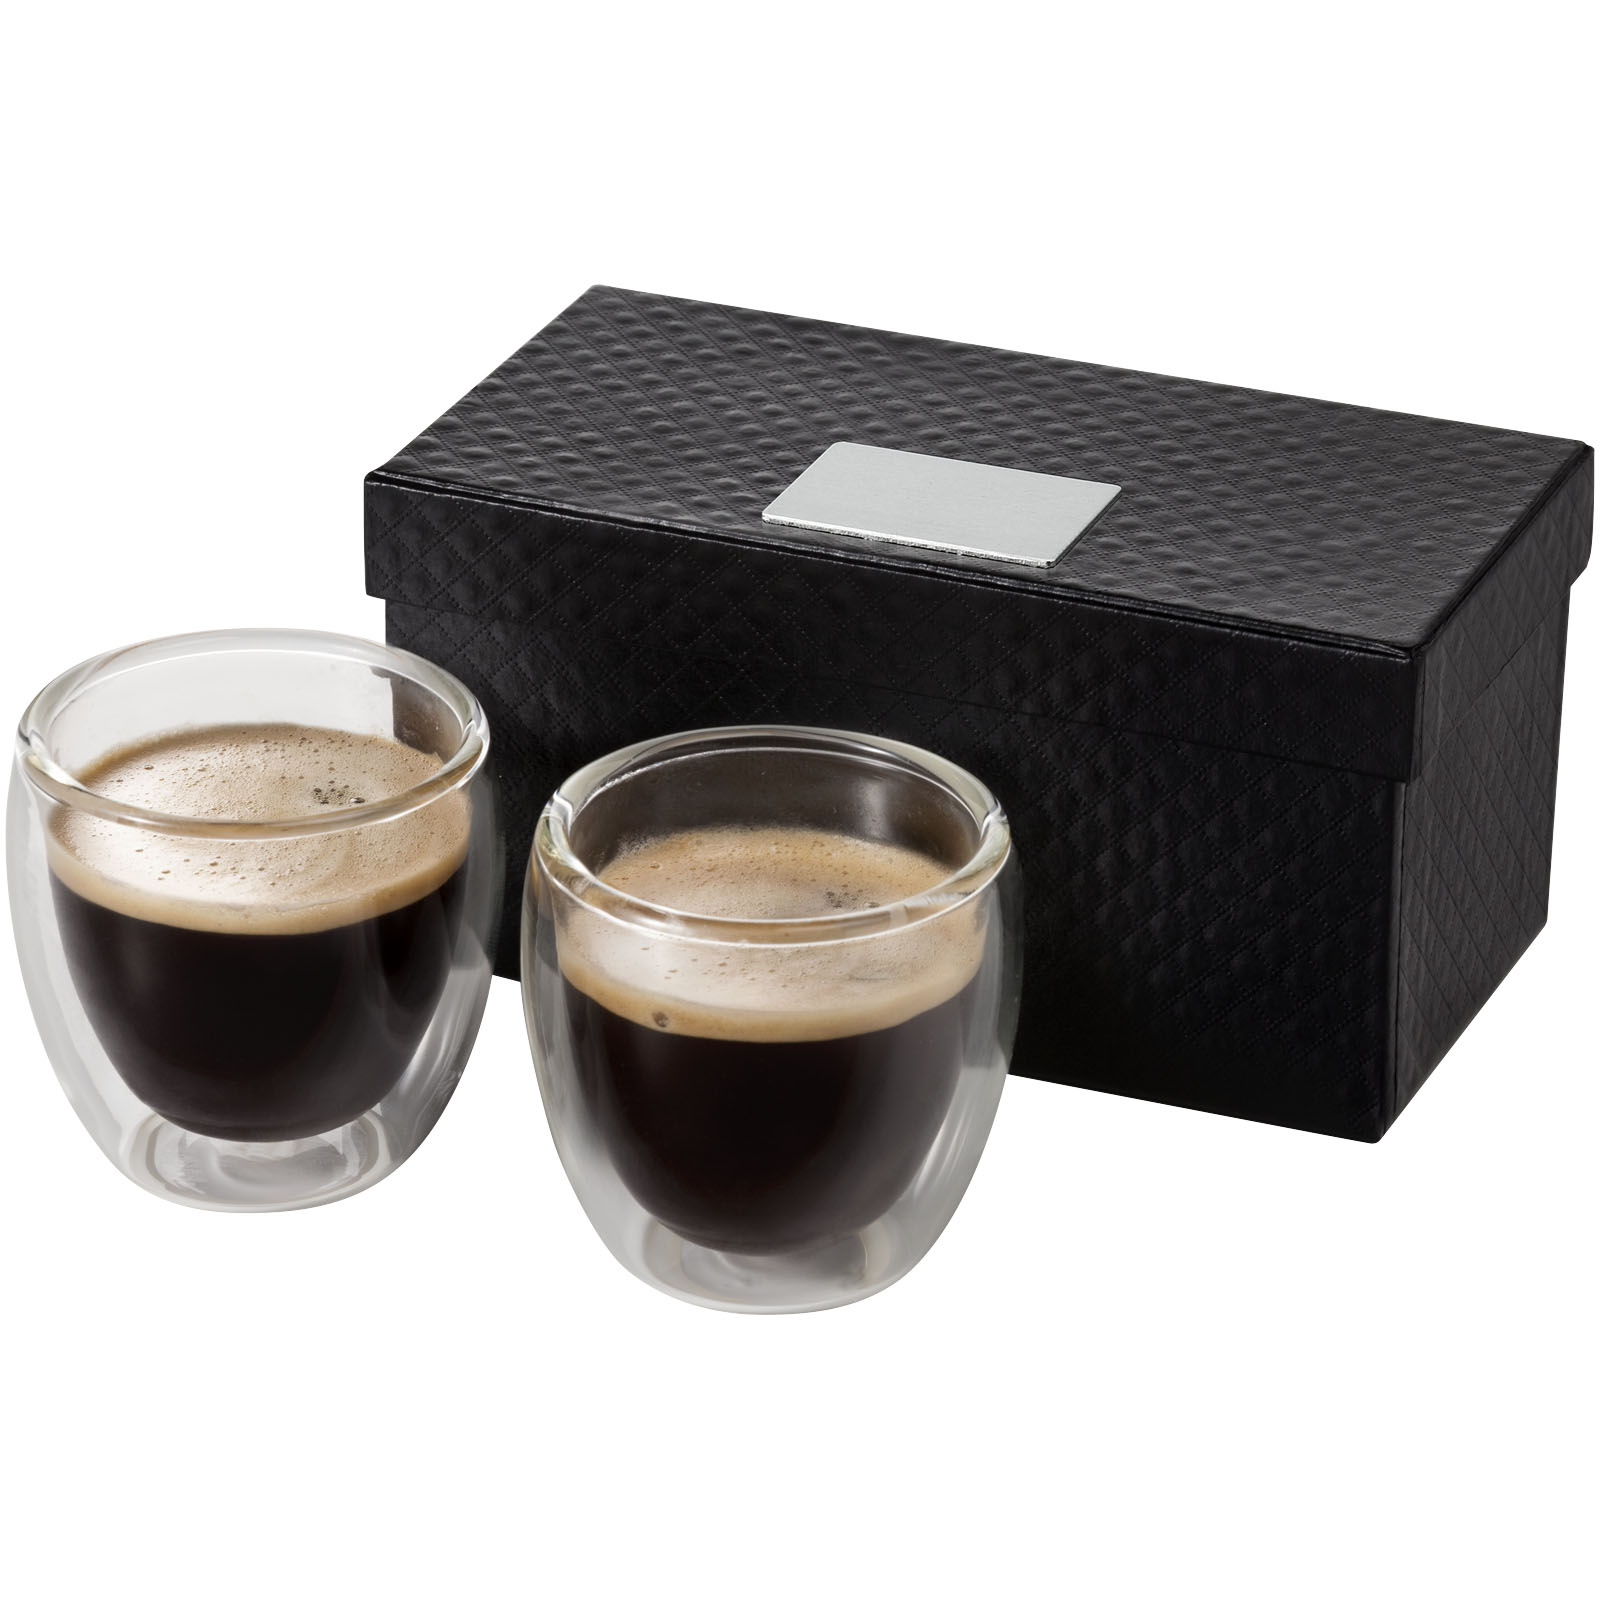 Drinkware - Boda 2-piece glass espresso cup set